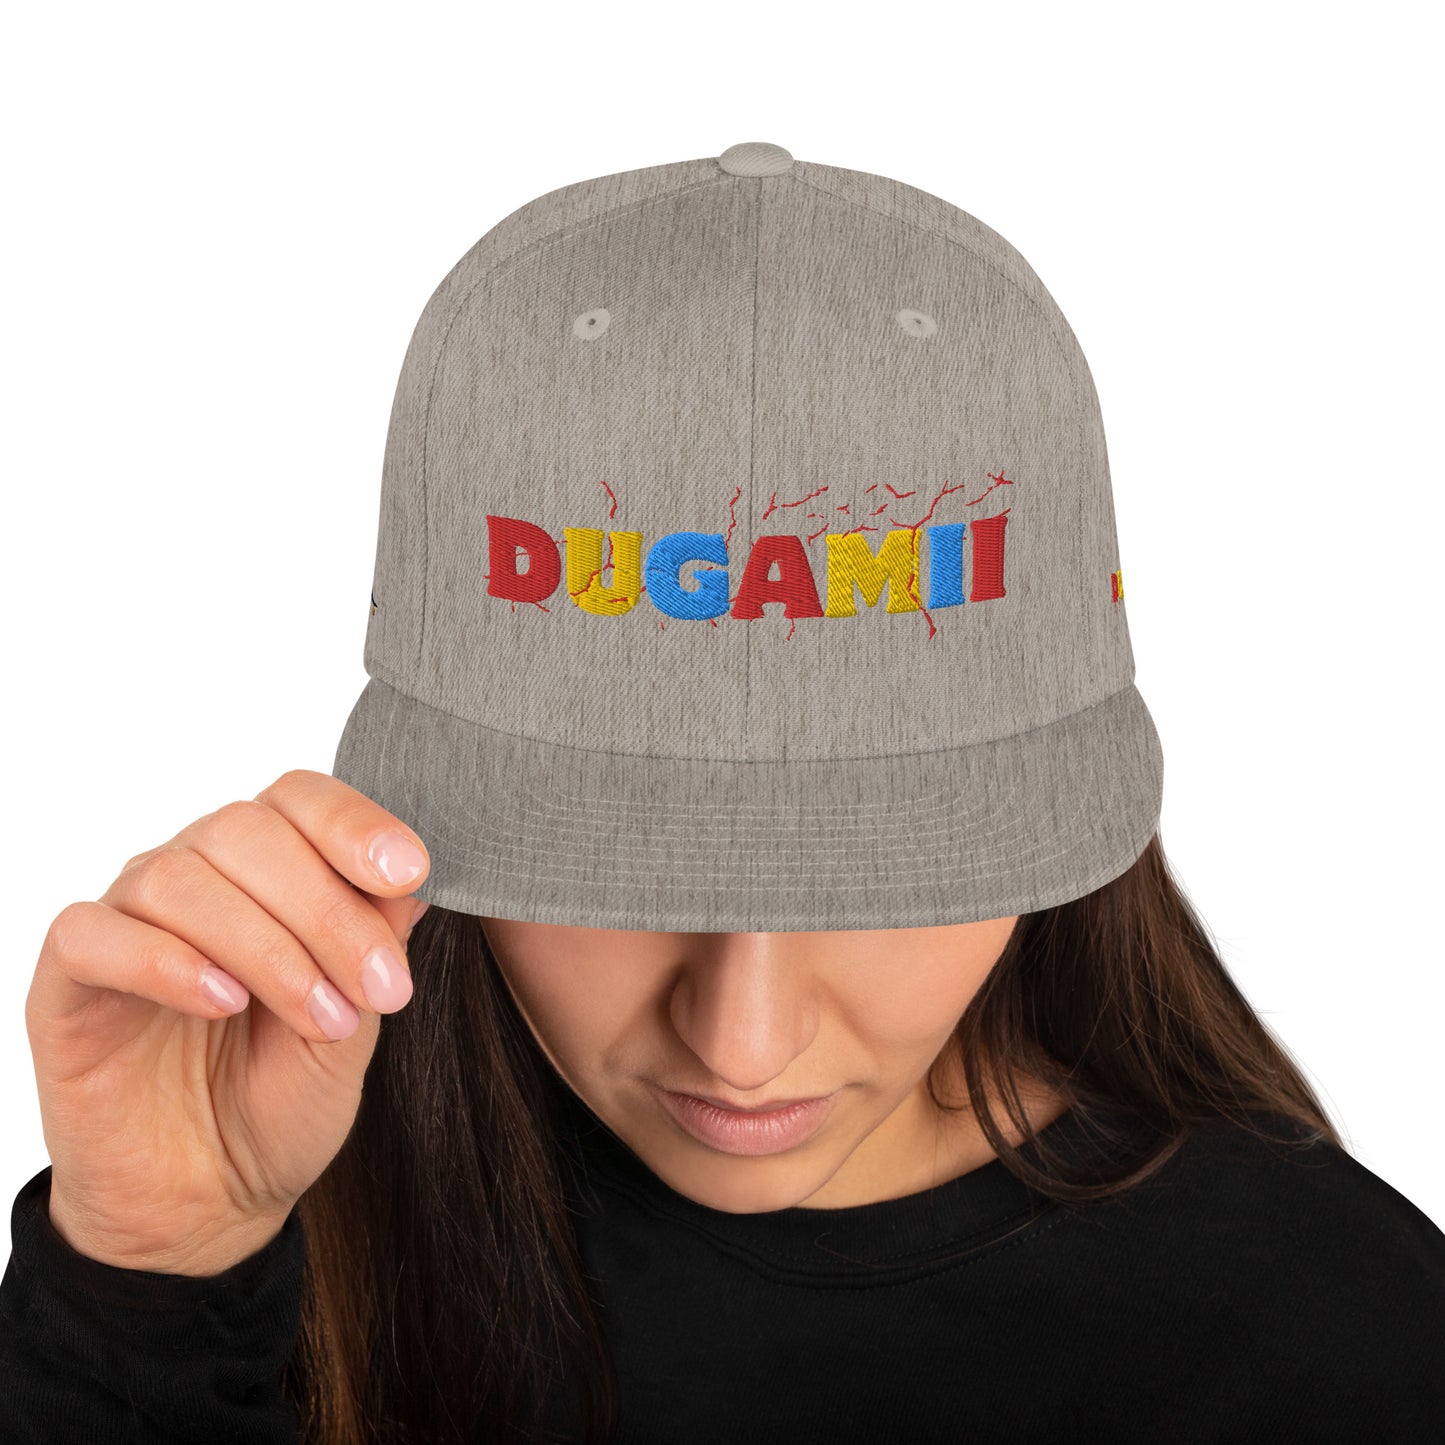 DuGamii Classic Multi-Color Snapback Hat